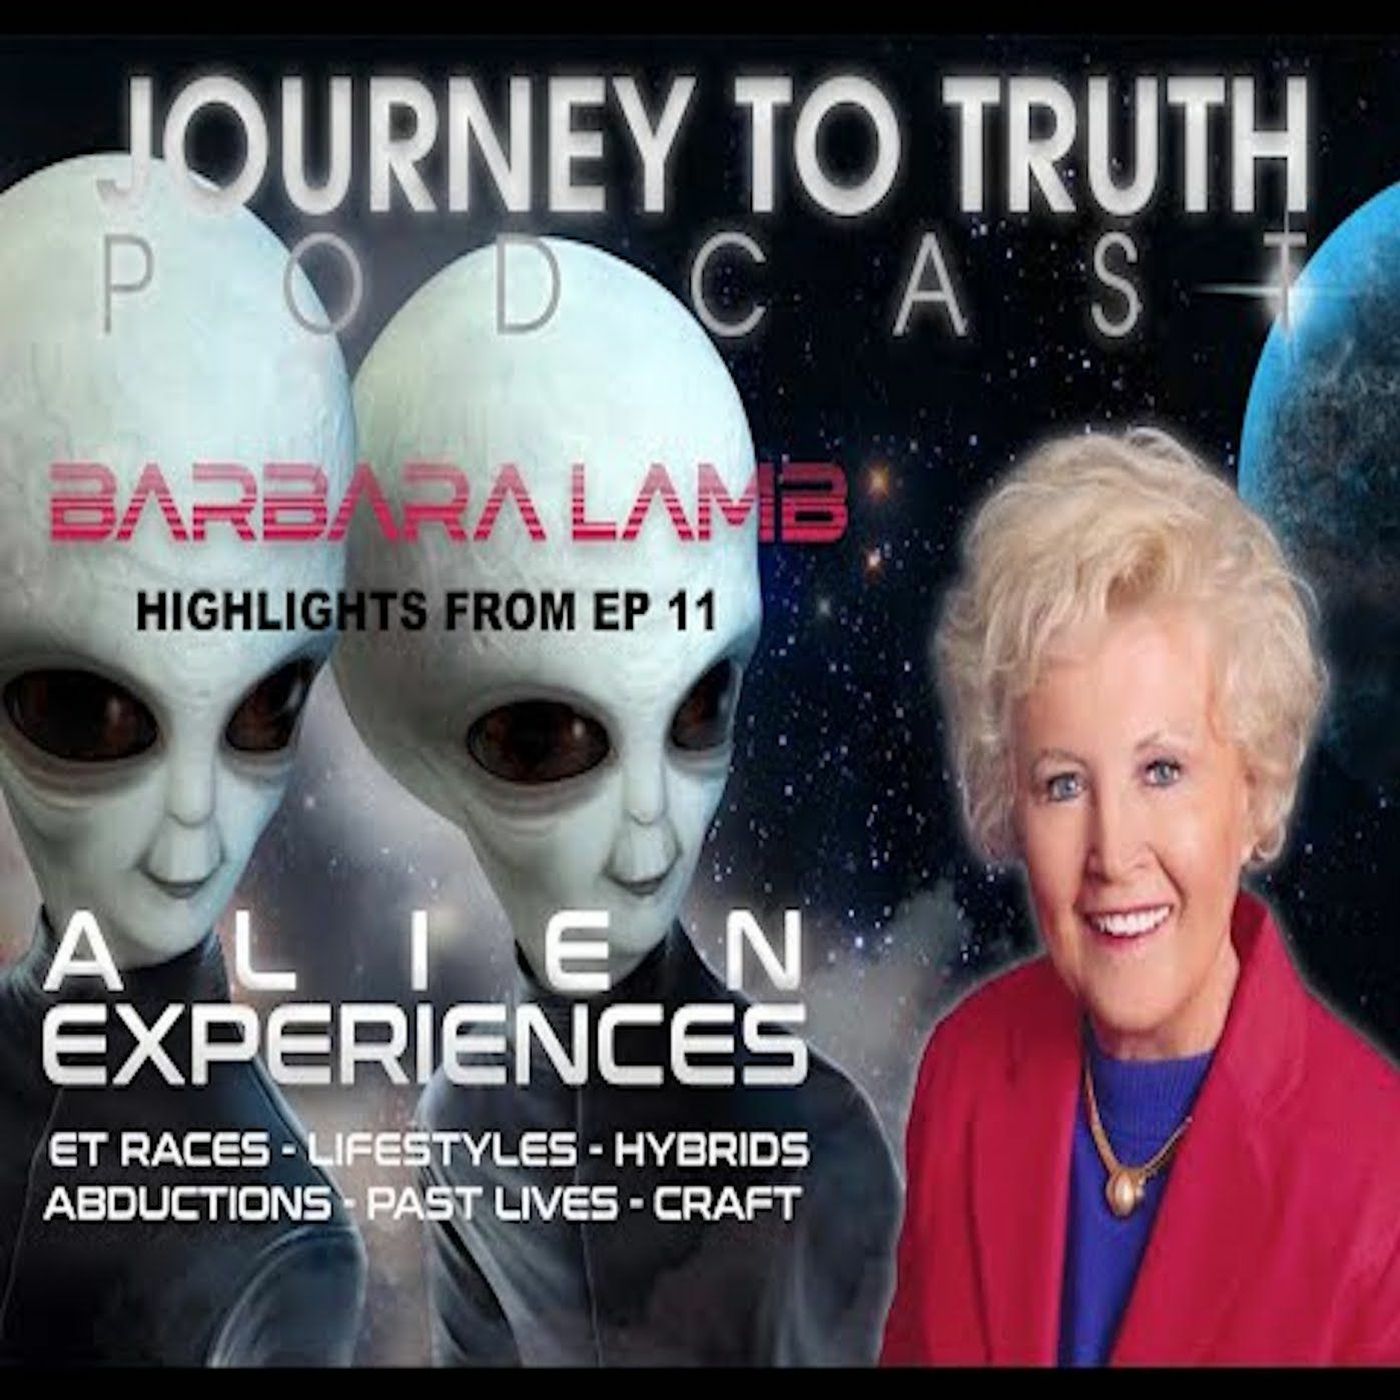 Barbara Lamb - Alien Experiences - Highlights From EP 11